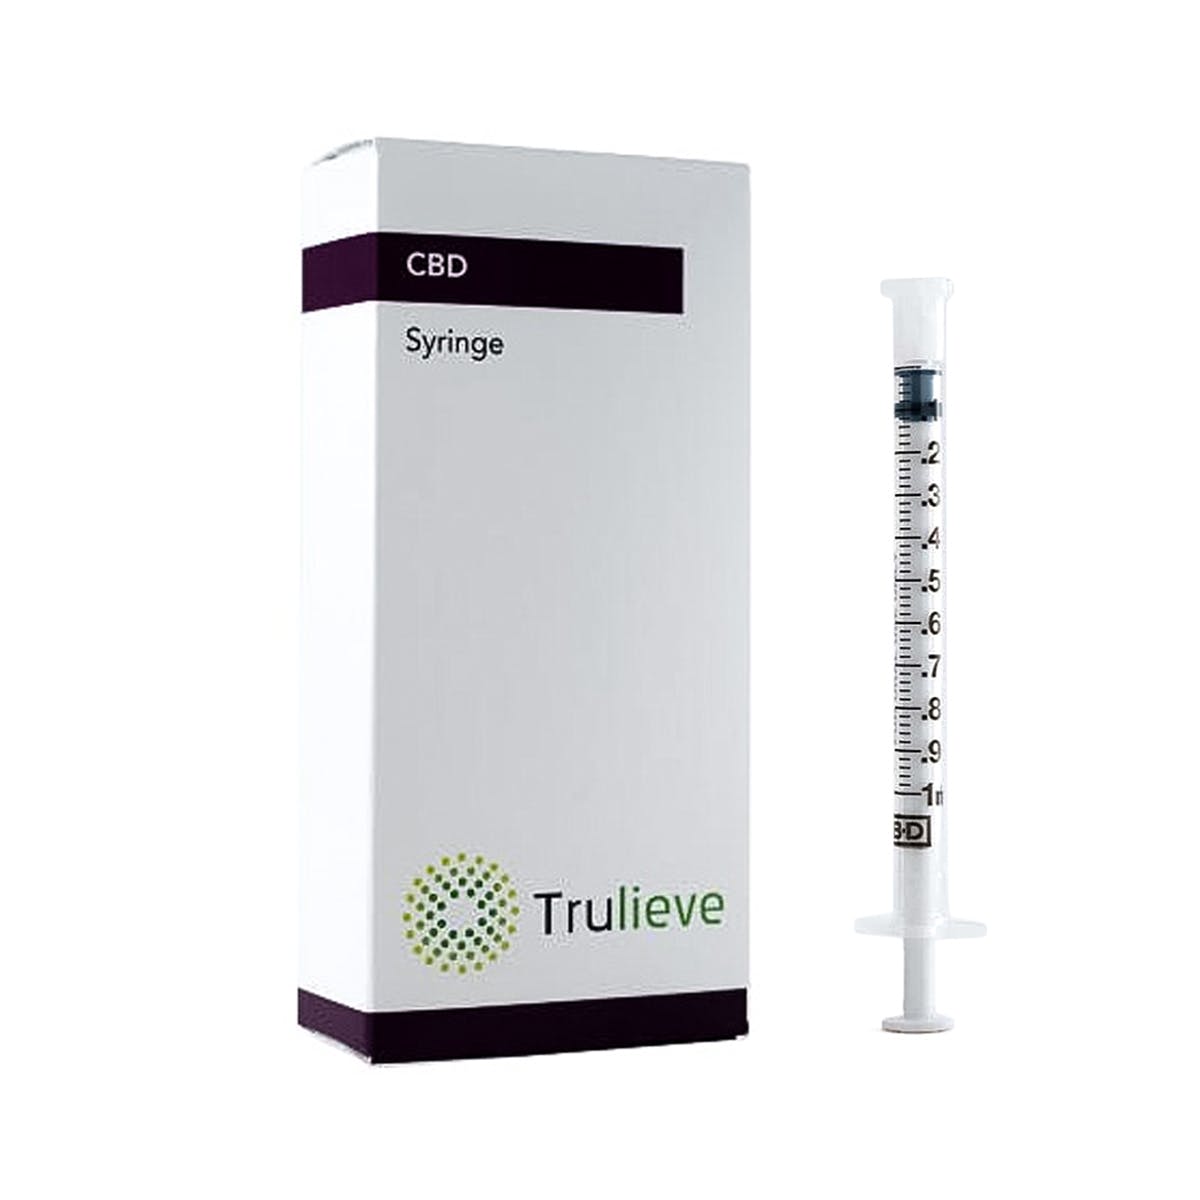 marijuana-dispensaries-trulieve-tampa-in-tampa-oral-syringe-200mg-cbd